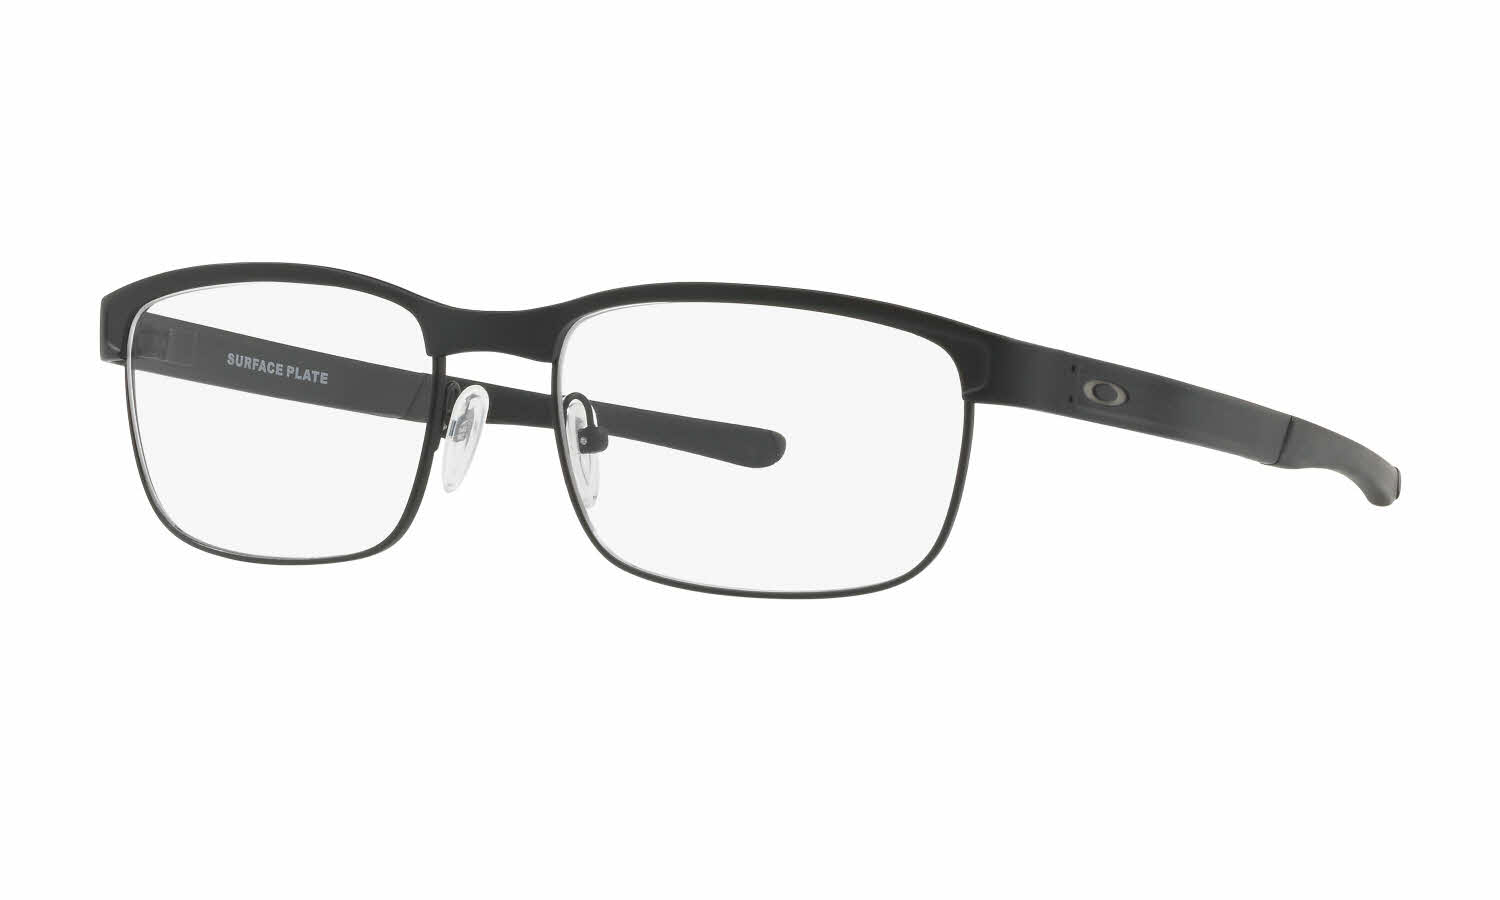 Oakley Surface Plate Eyeglasses | Free 